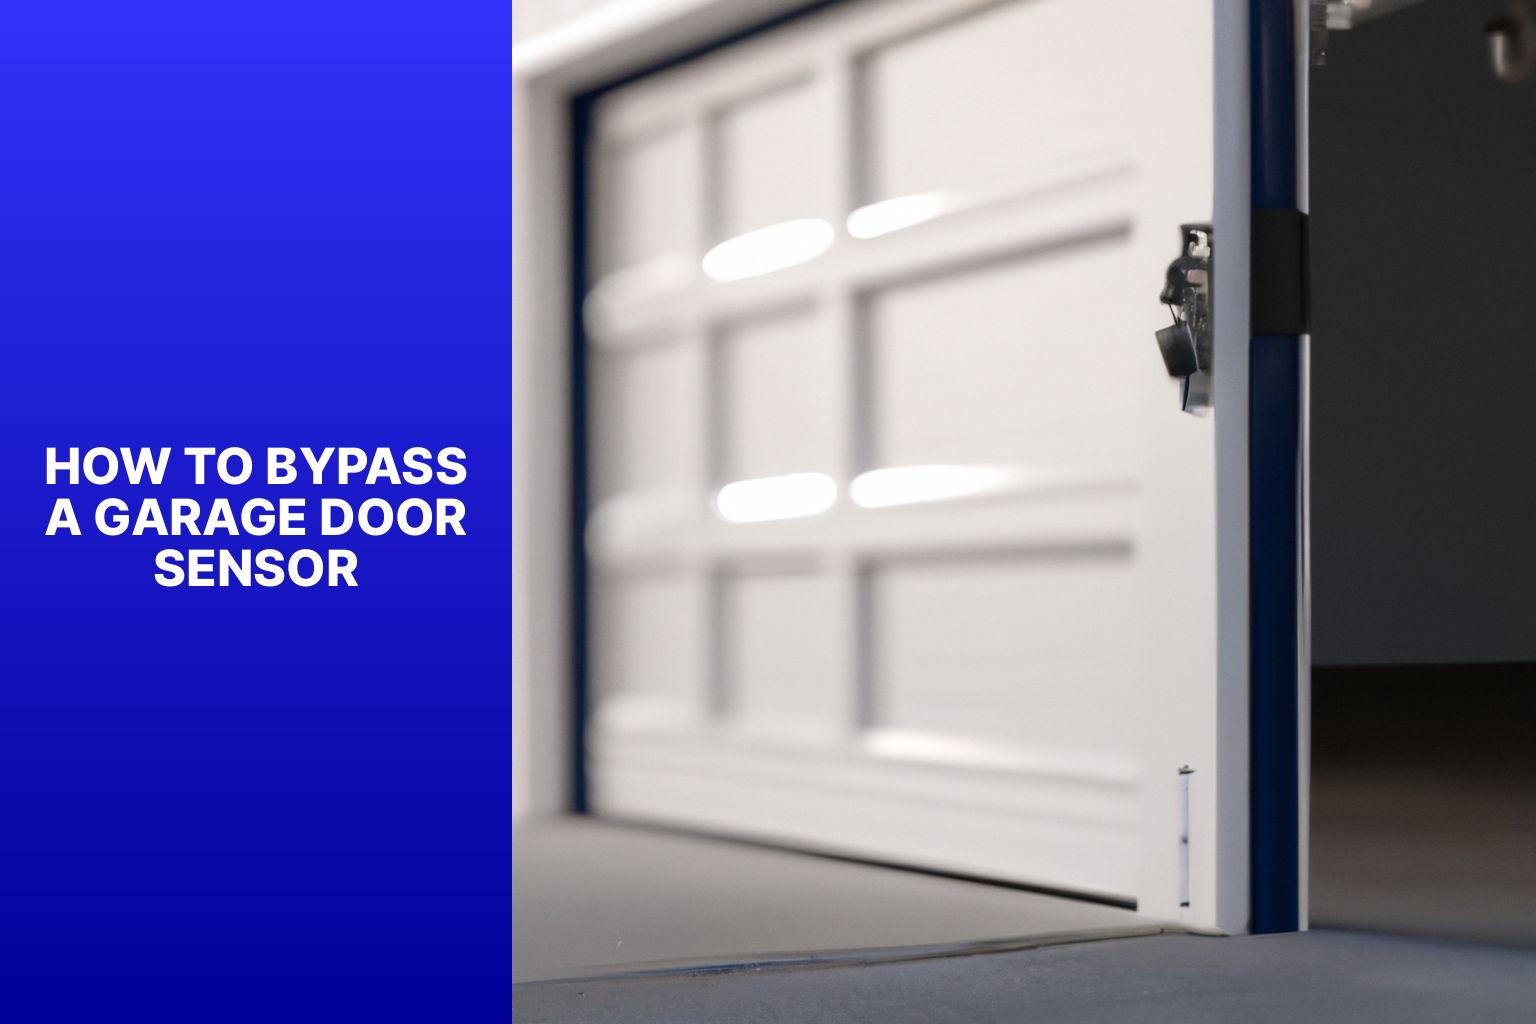 How to Bypass a Garage Door Sensor